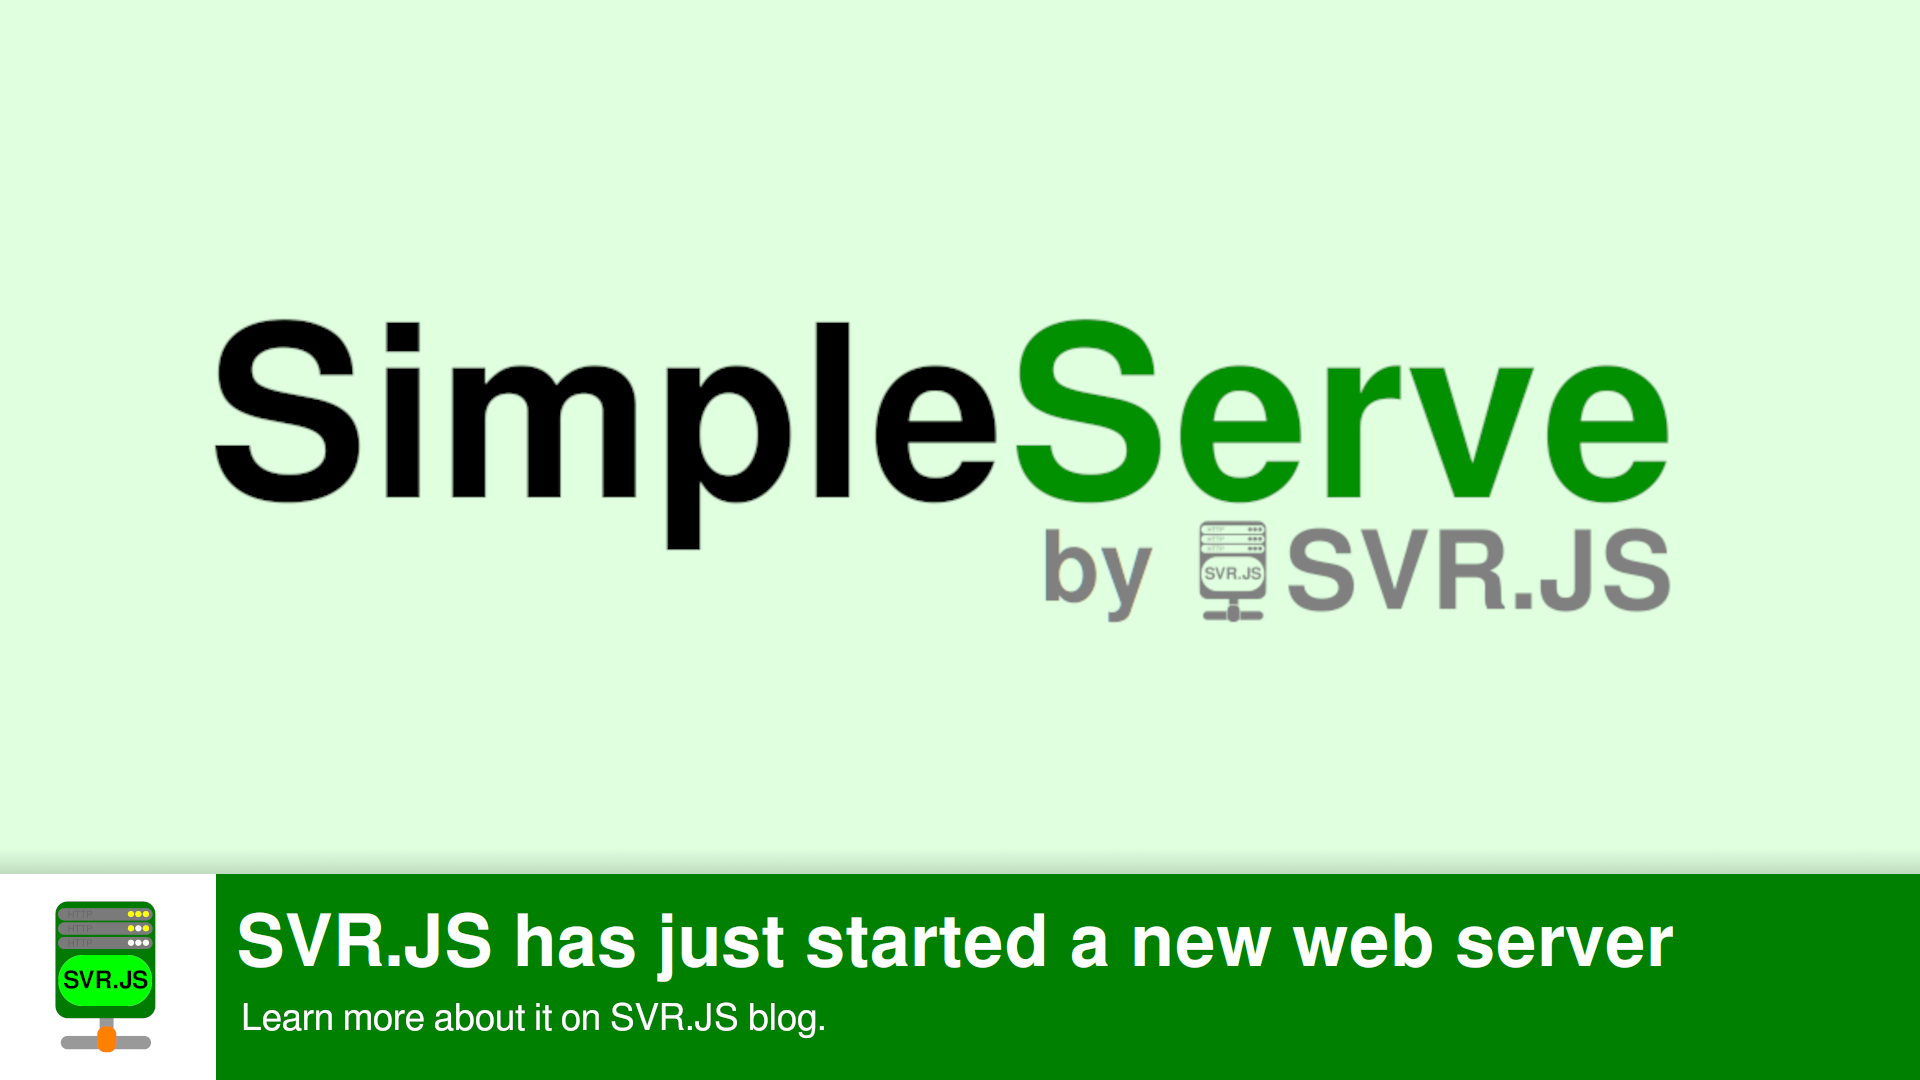 SVR.JS has just started a new web server